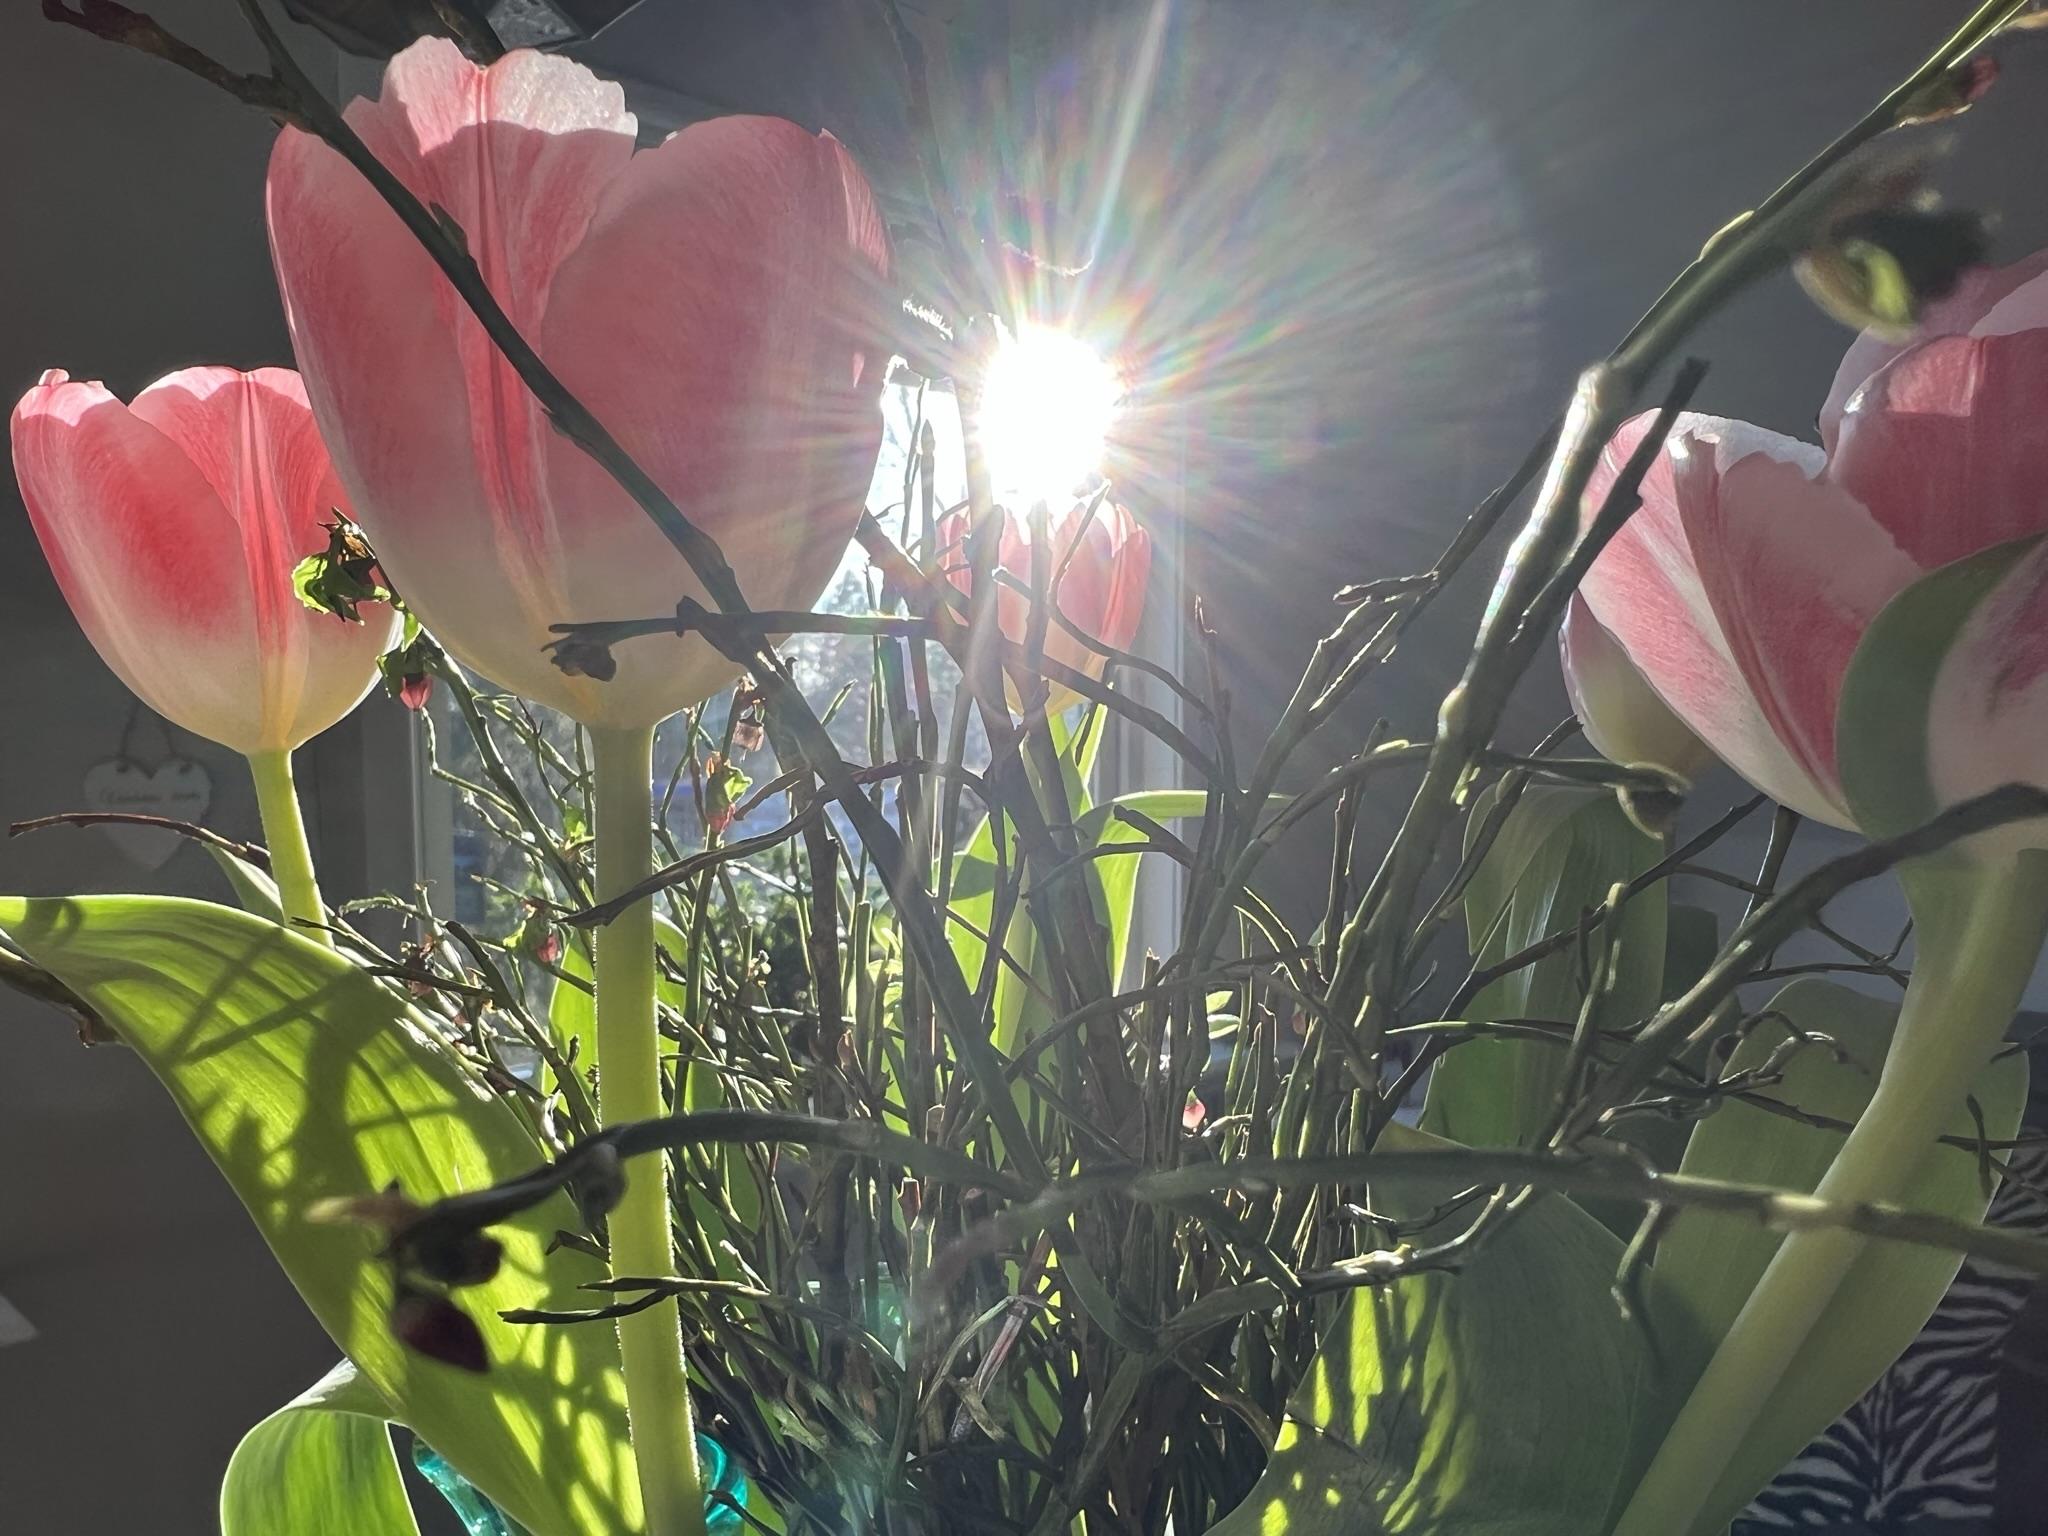 Sun tulips and joy to life